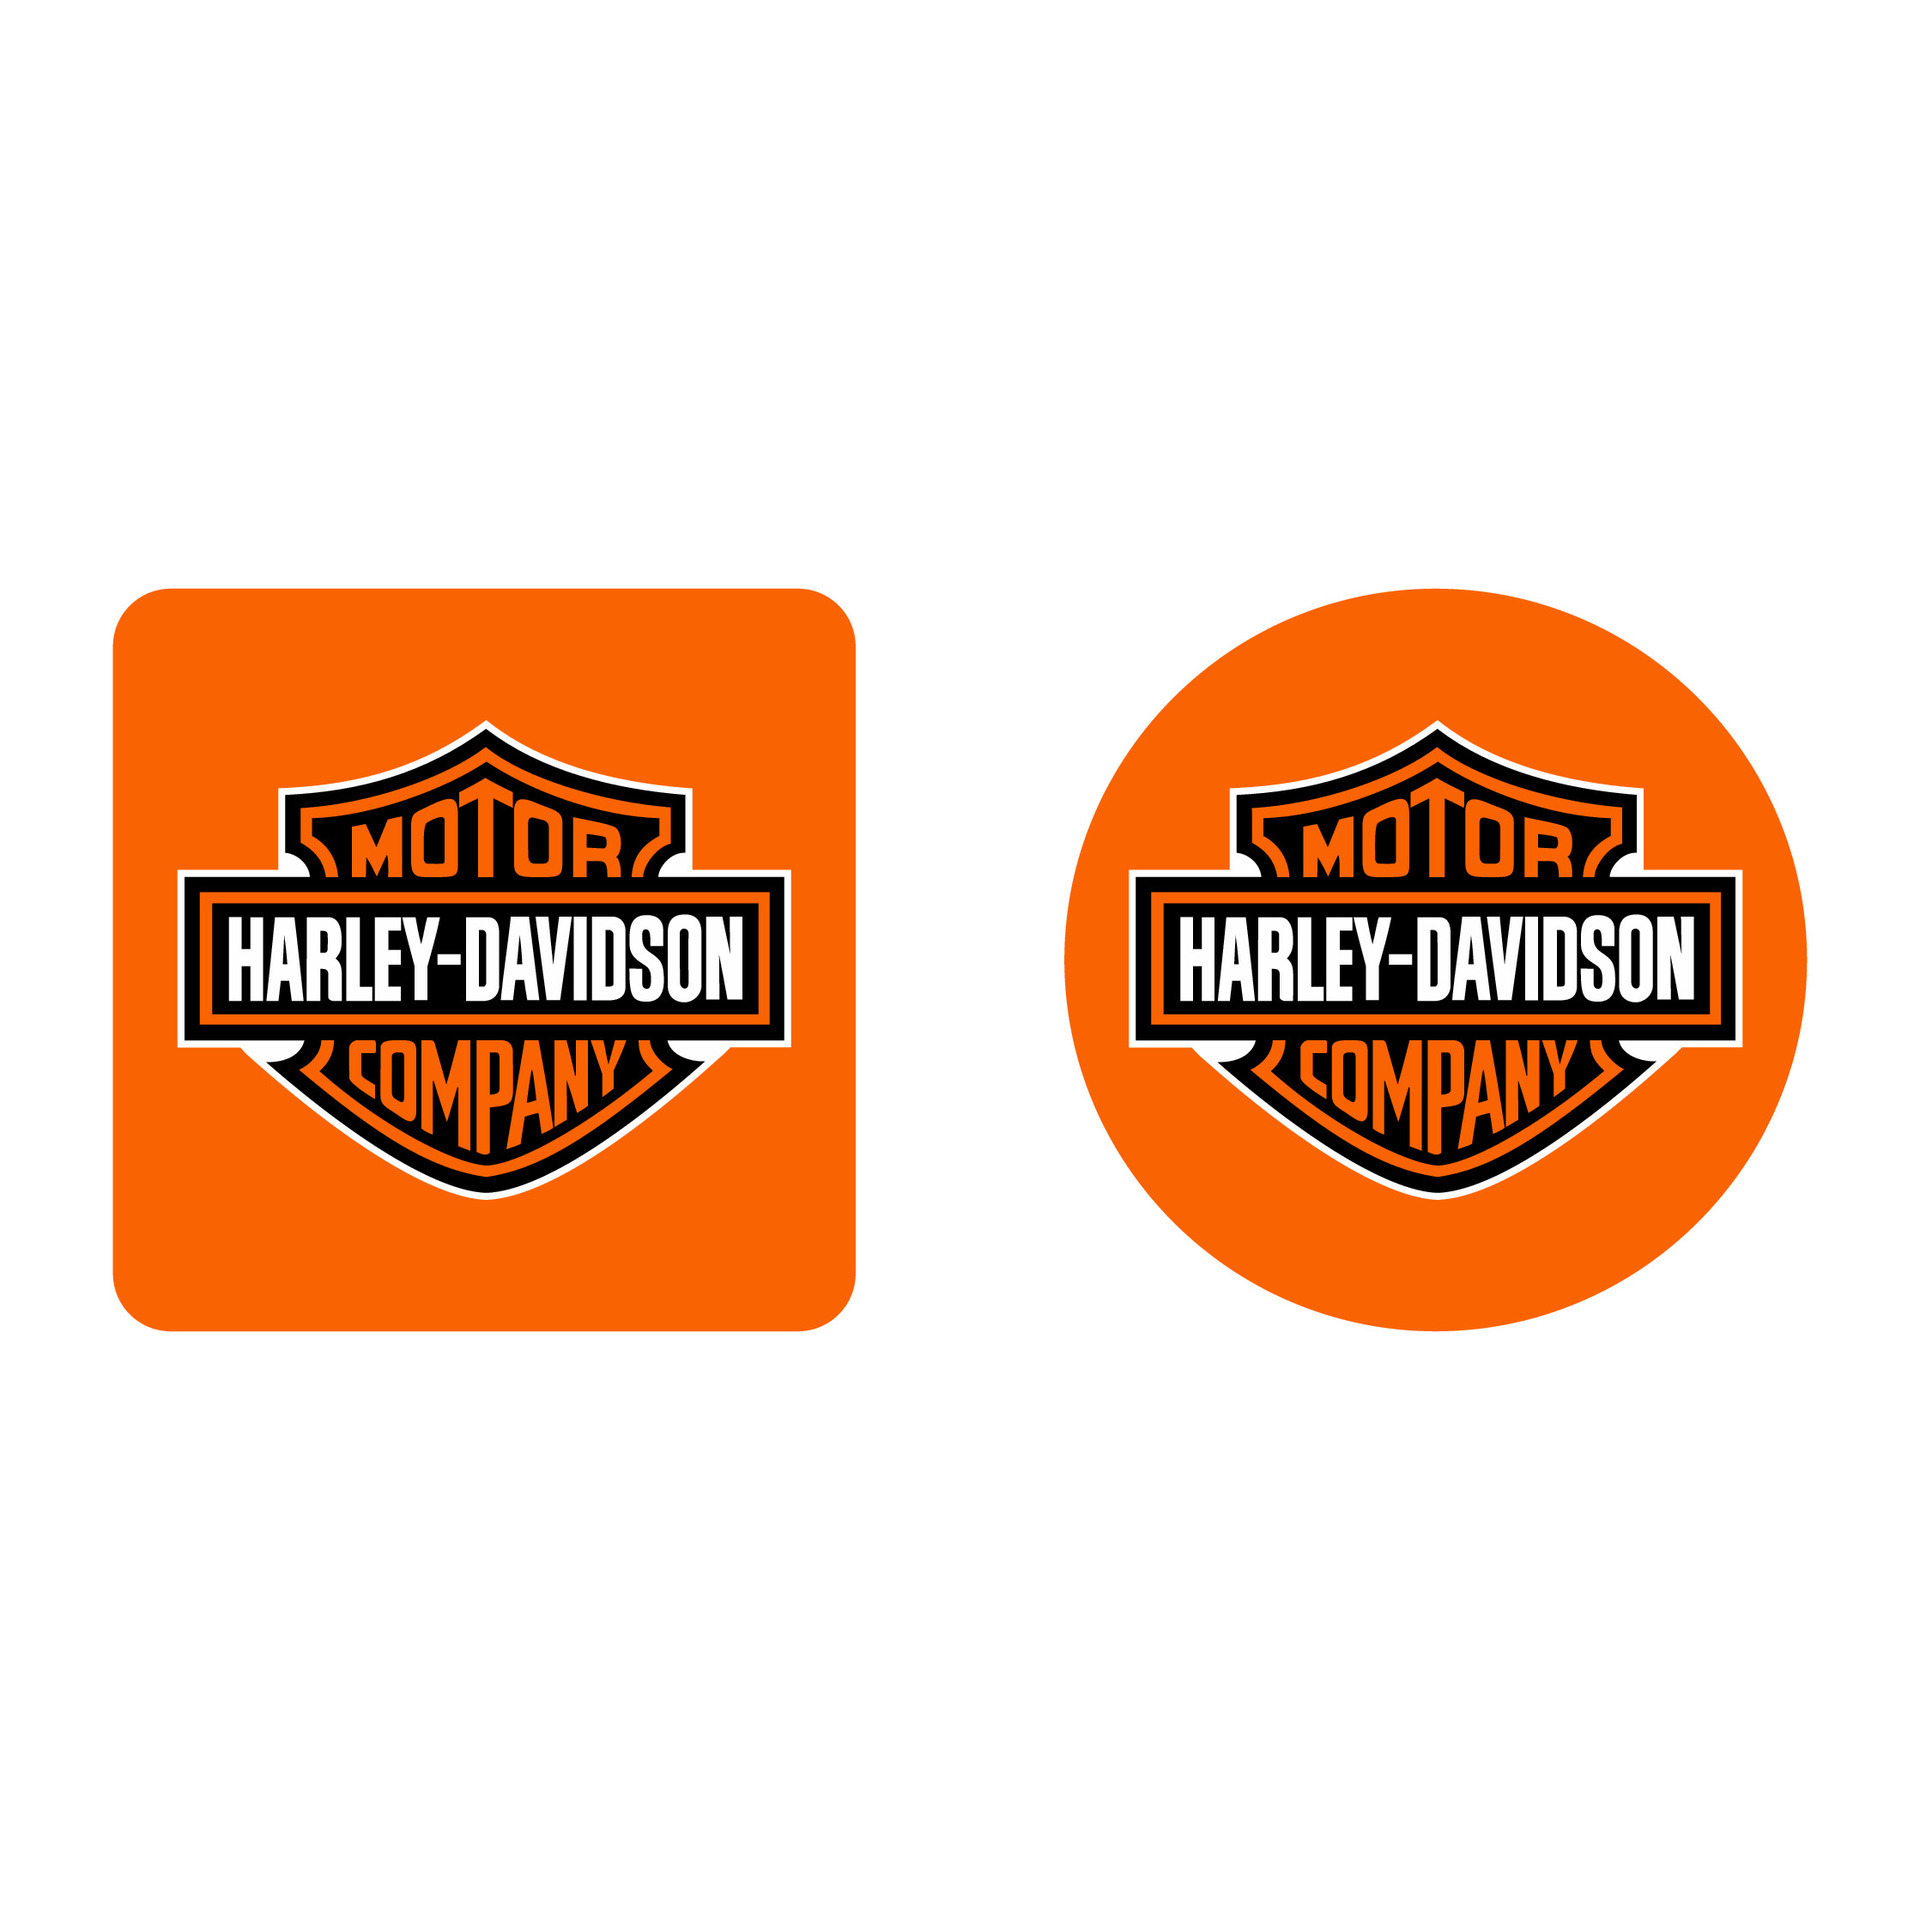 Harley Davidson logo Vector 25270422 Vector Art at Vecteezy